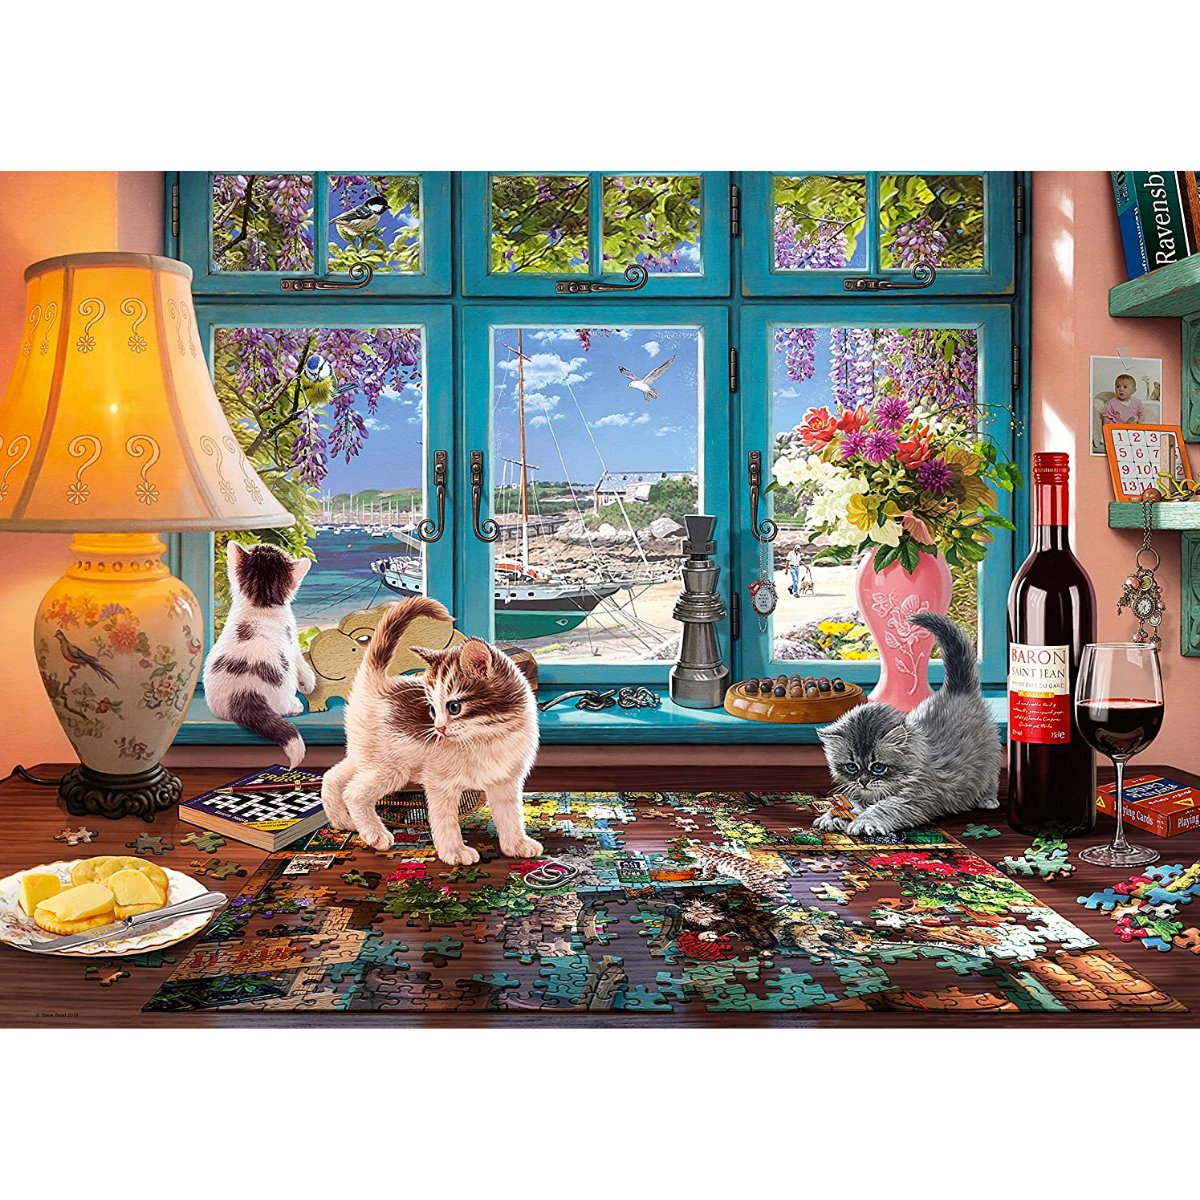 Ravensburger The Puzzler's Desk Jigsaw Puzzle (1000 Piece) - Phillips Hobbies